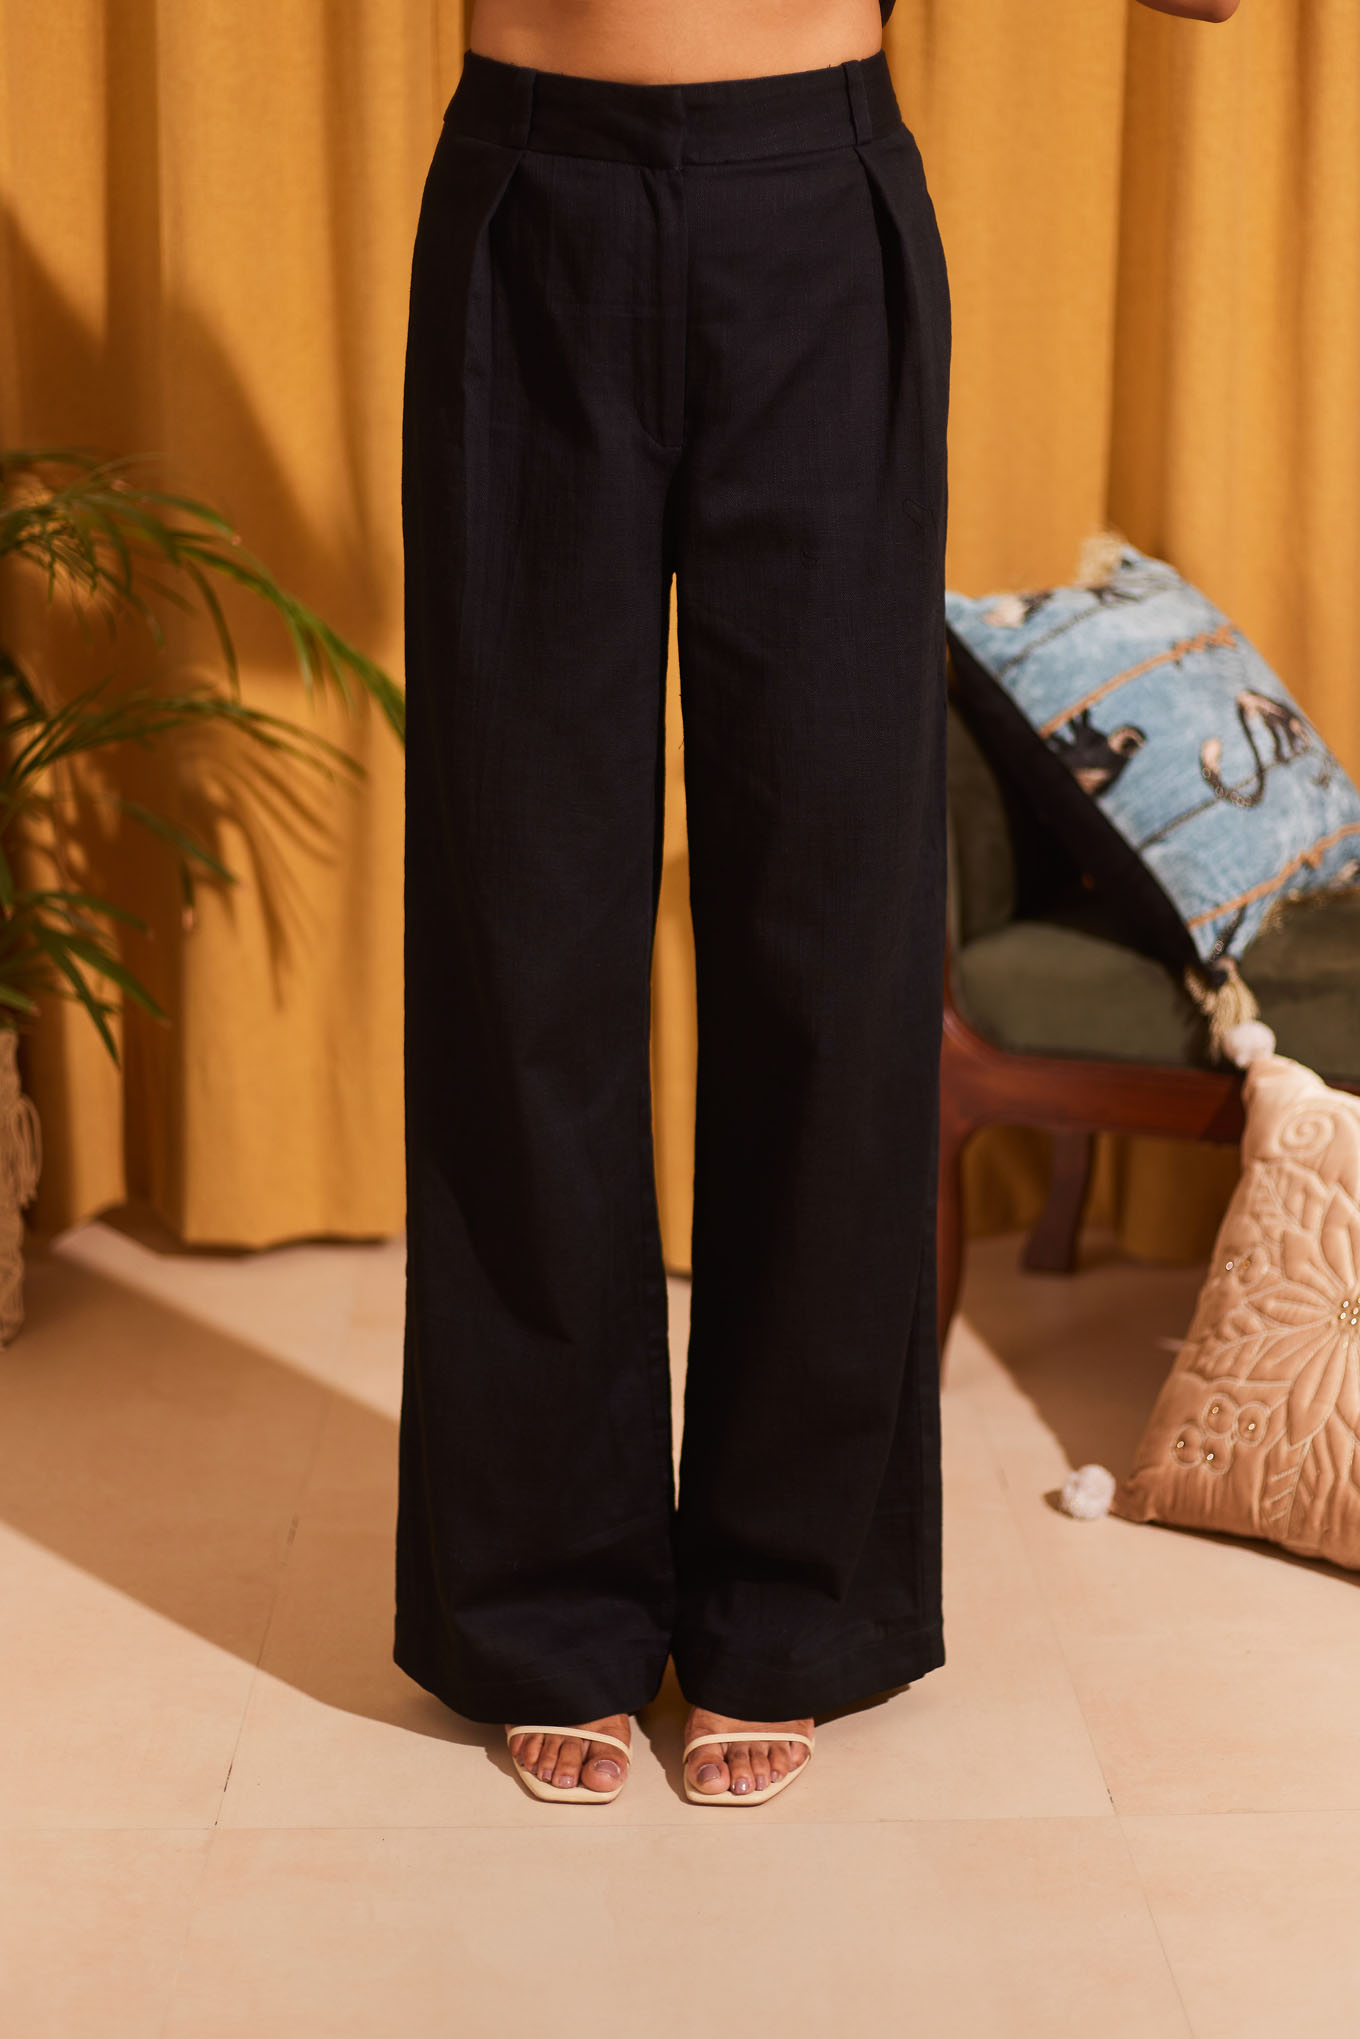 Fashion Women Corporate Office Wear Straight High Waist Belted Pant Trousers  - Black | Jumia Nigeria